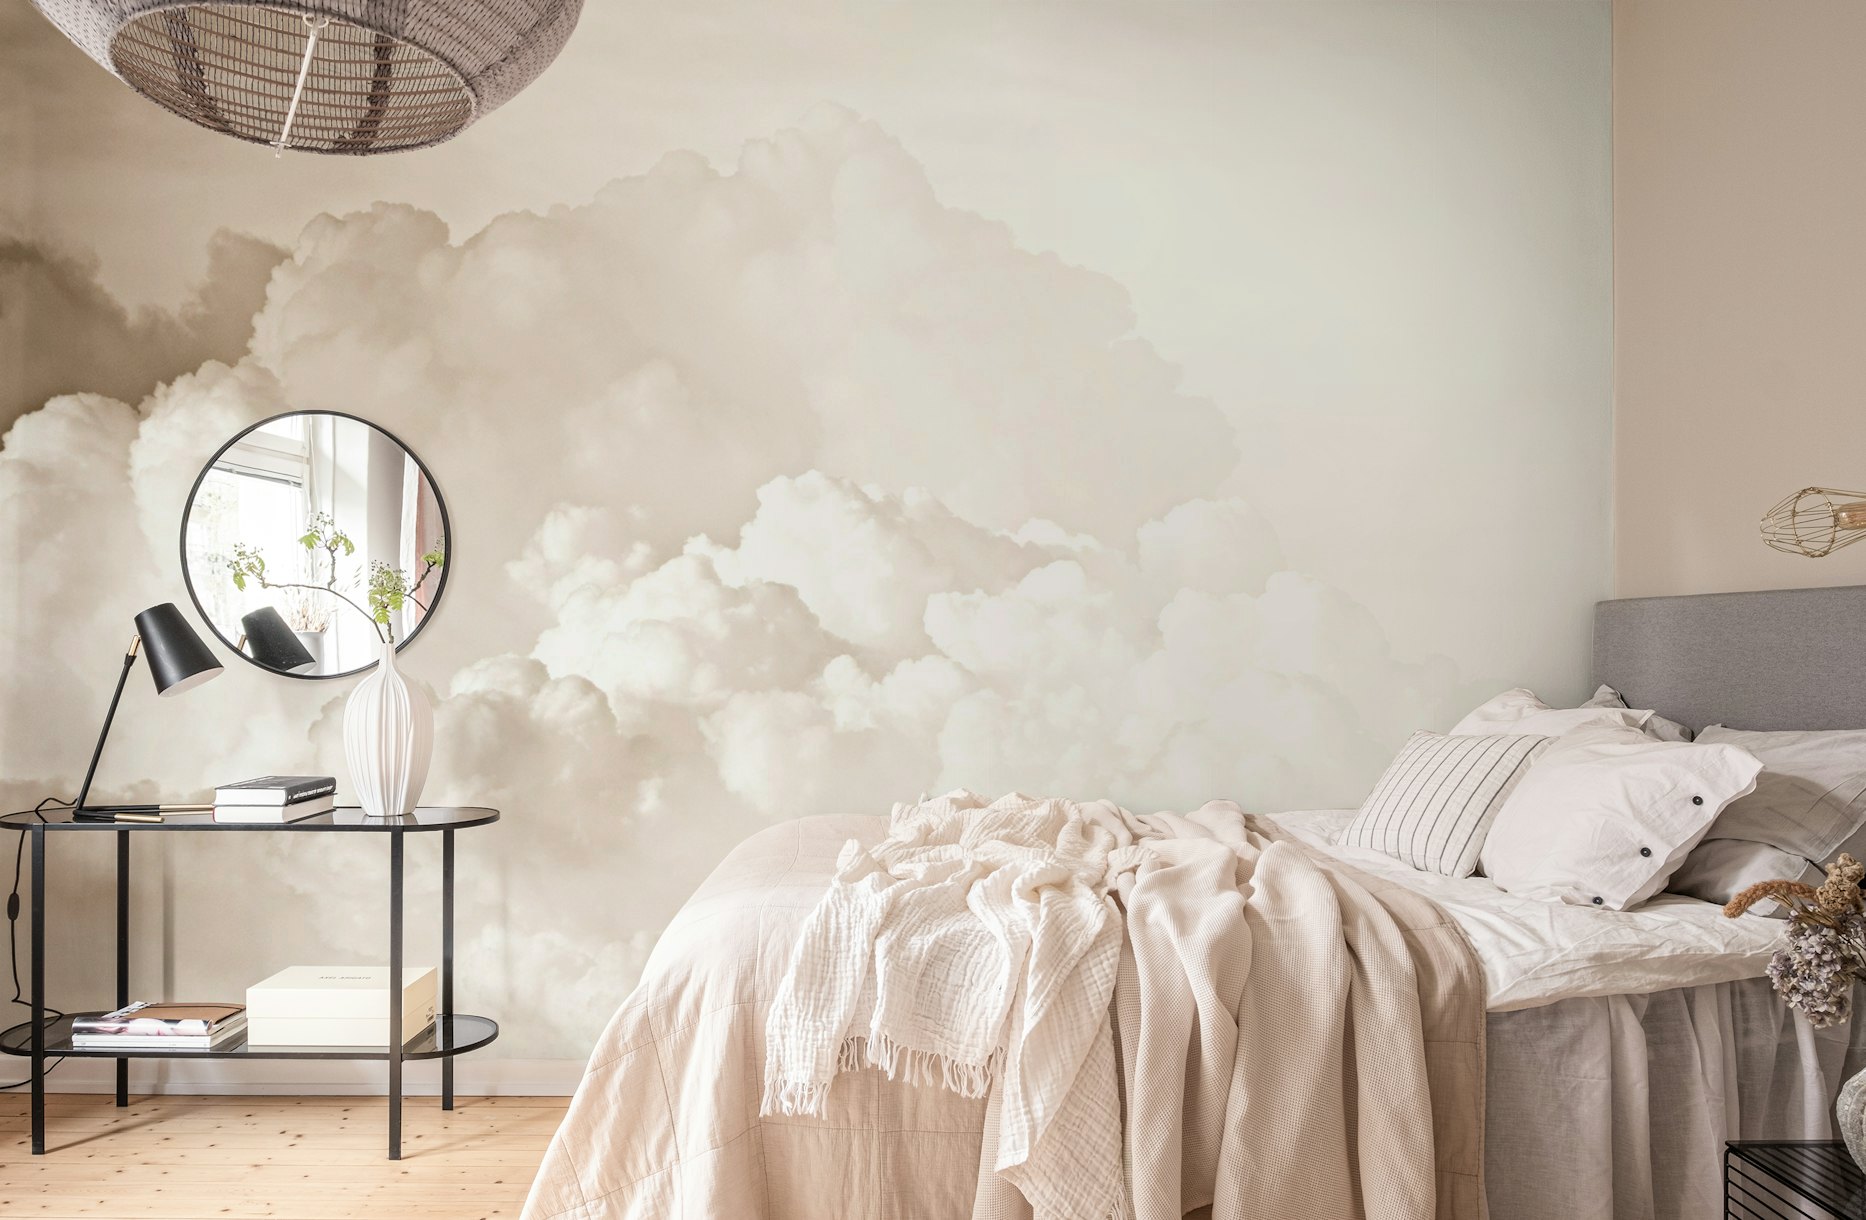 Monika Strigel® Cotton Clouds Beige wallpaper with serene, sky-like design